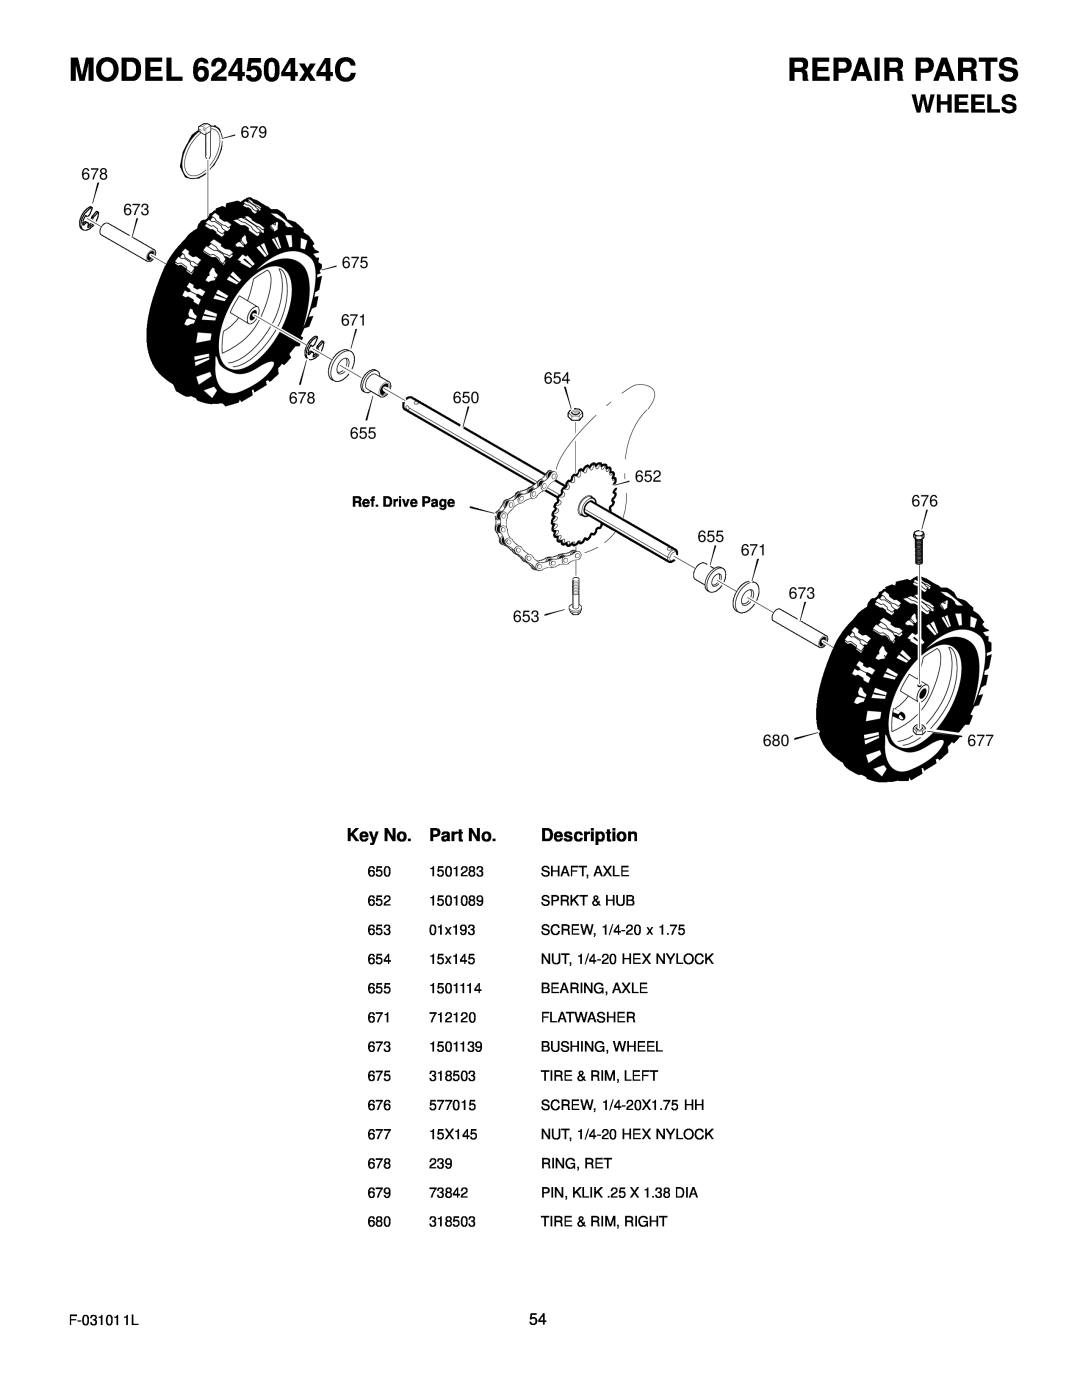 Murray manual Wheels, MODEL 624504x4C, Repair Parts, Description, Ref. Drive Page 